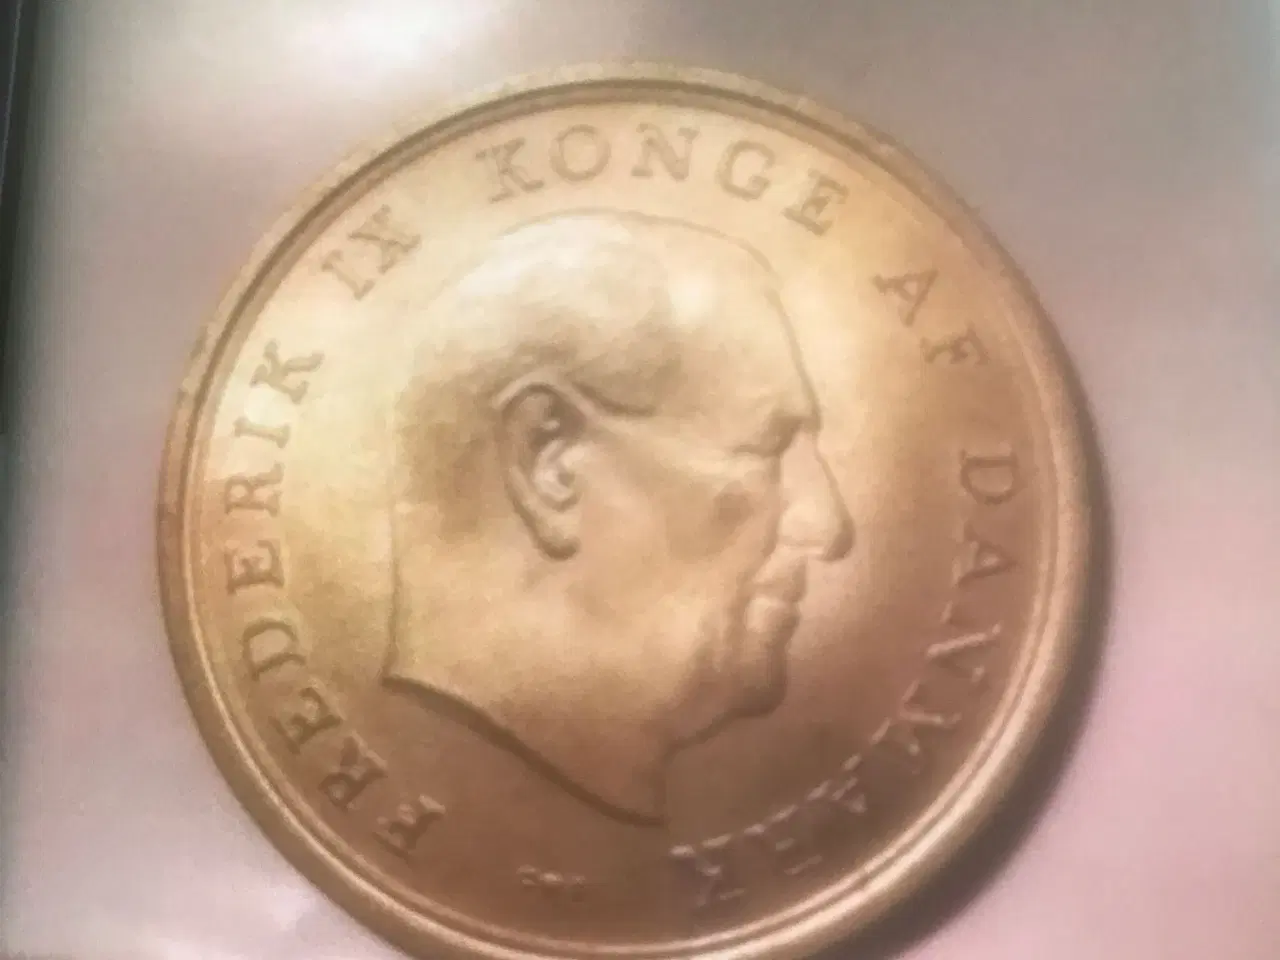 Billede 2 - 10 kr erindrings mønt fra 1967